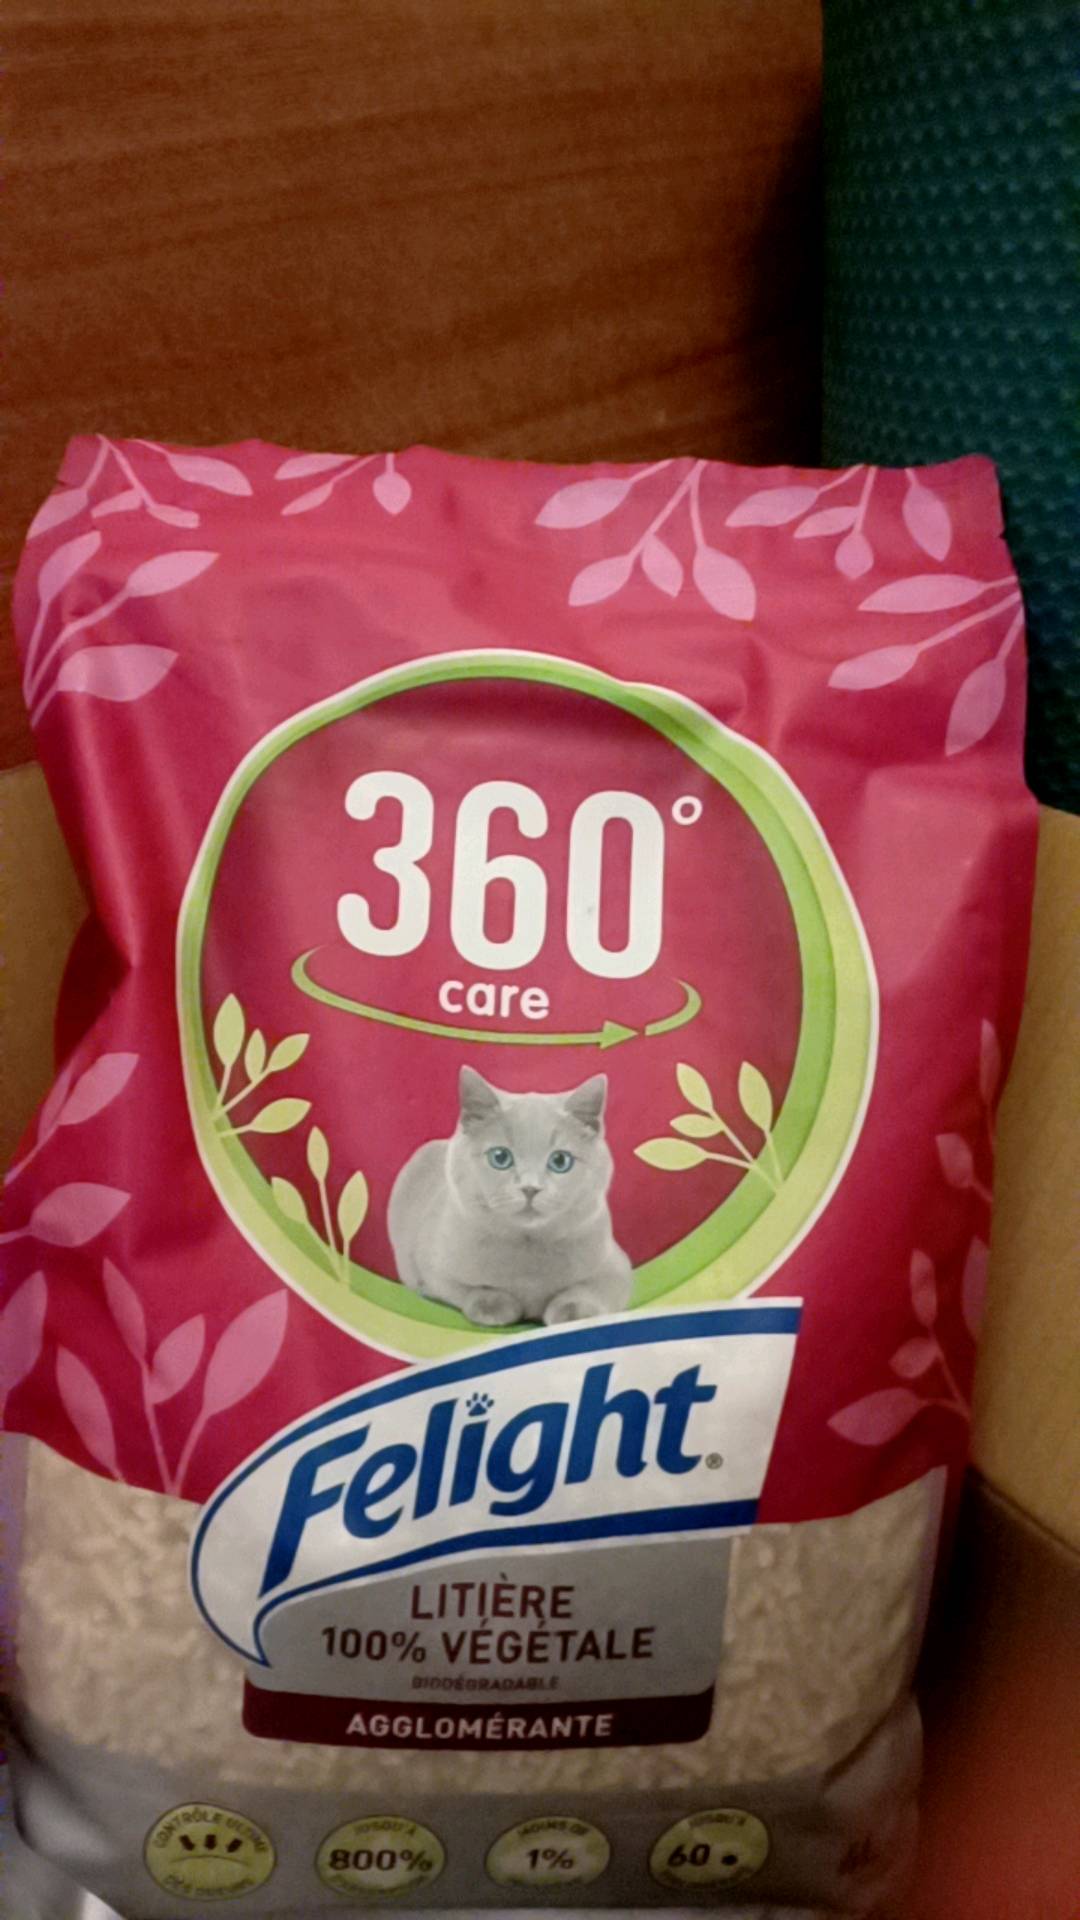 Felight 360 Care 貓砂4lb 兩公斤豆腐砂豆腐貓砂可沖馬桶| 蝦皮購物